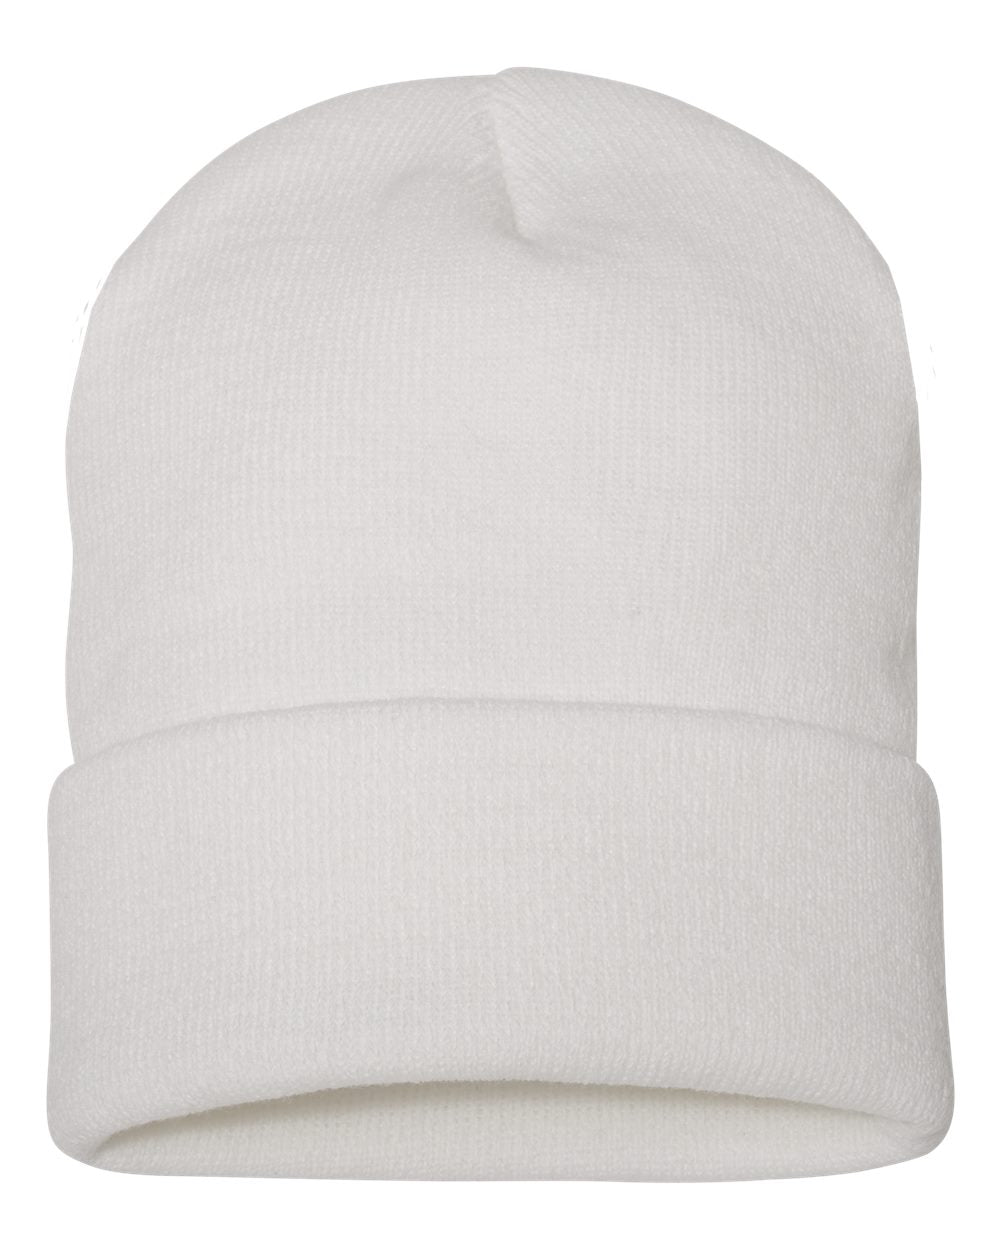 Custom embroidery beanie - ladies or men cuffed knit cap